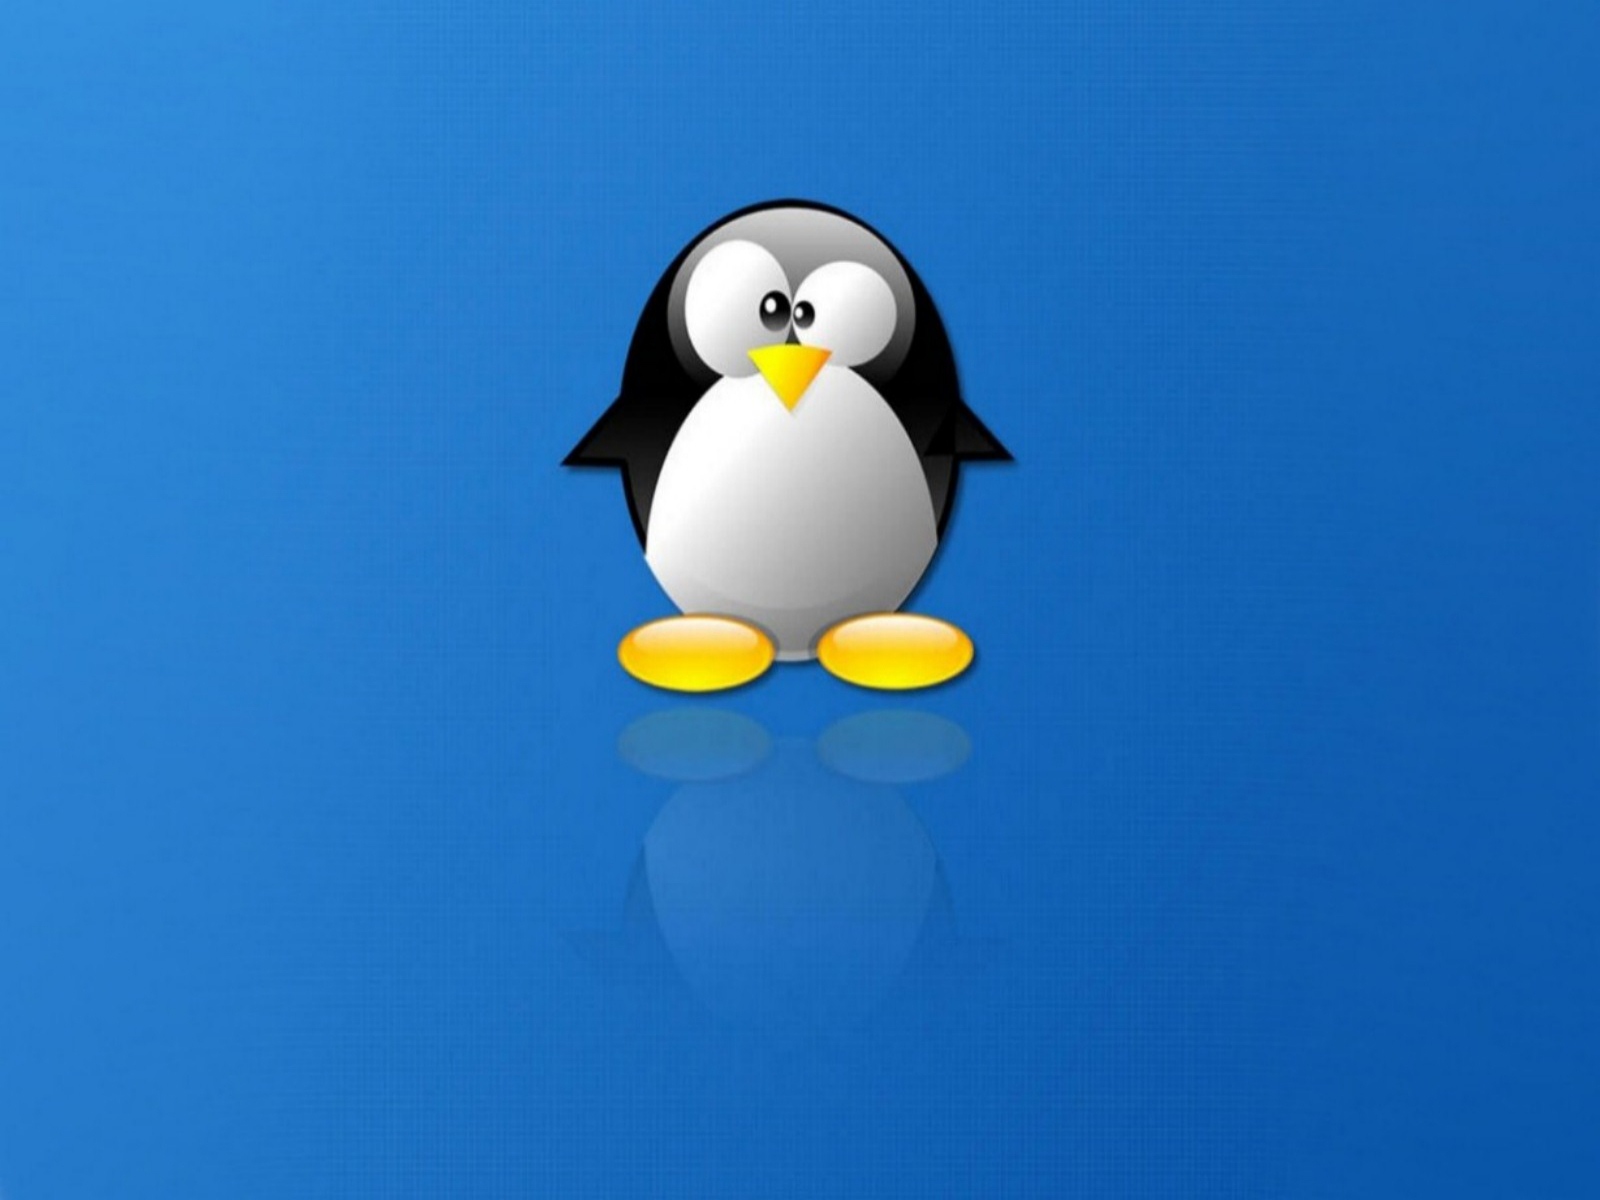 Linux Penguin Wallpapers Wide Tux Desktop IPhone And